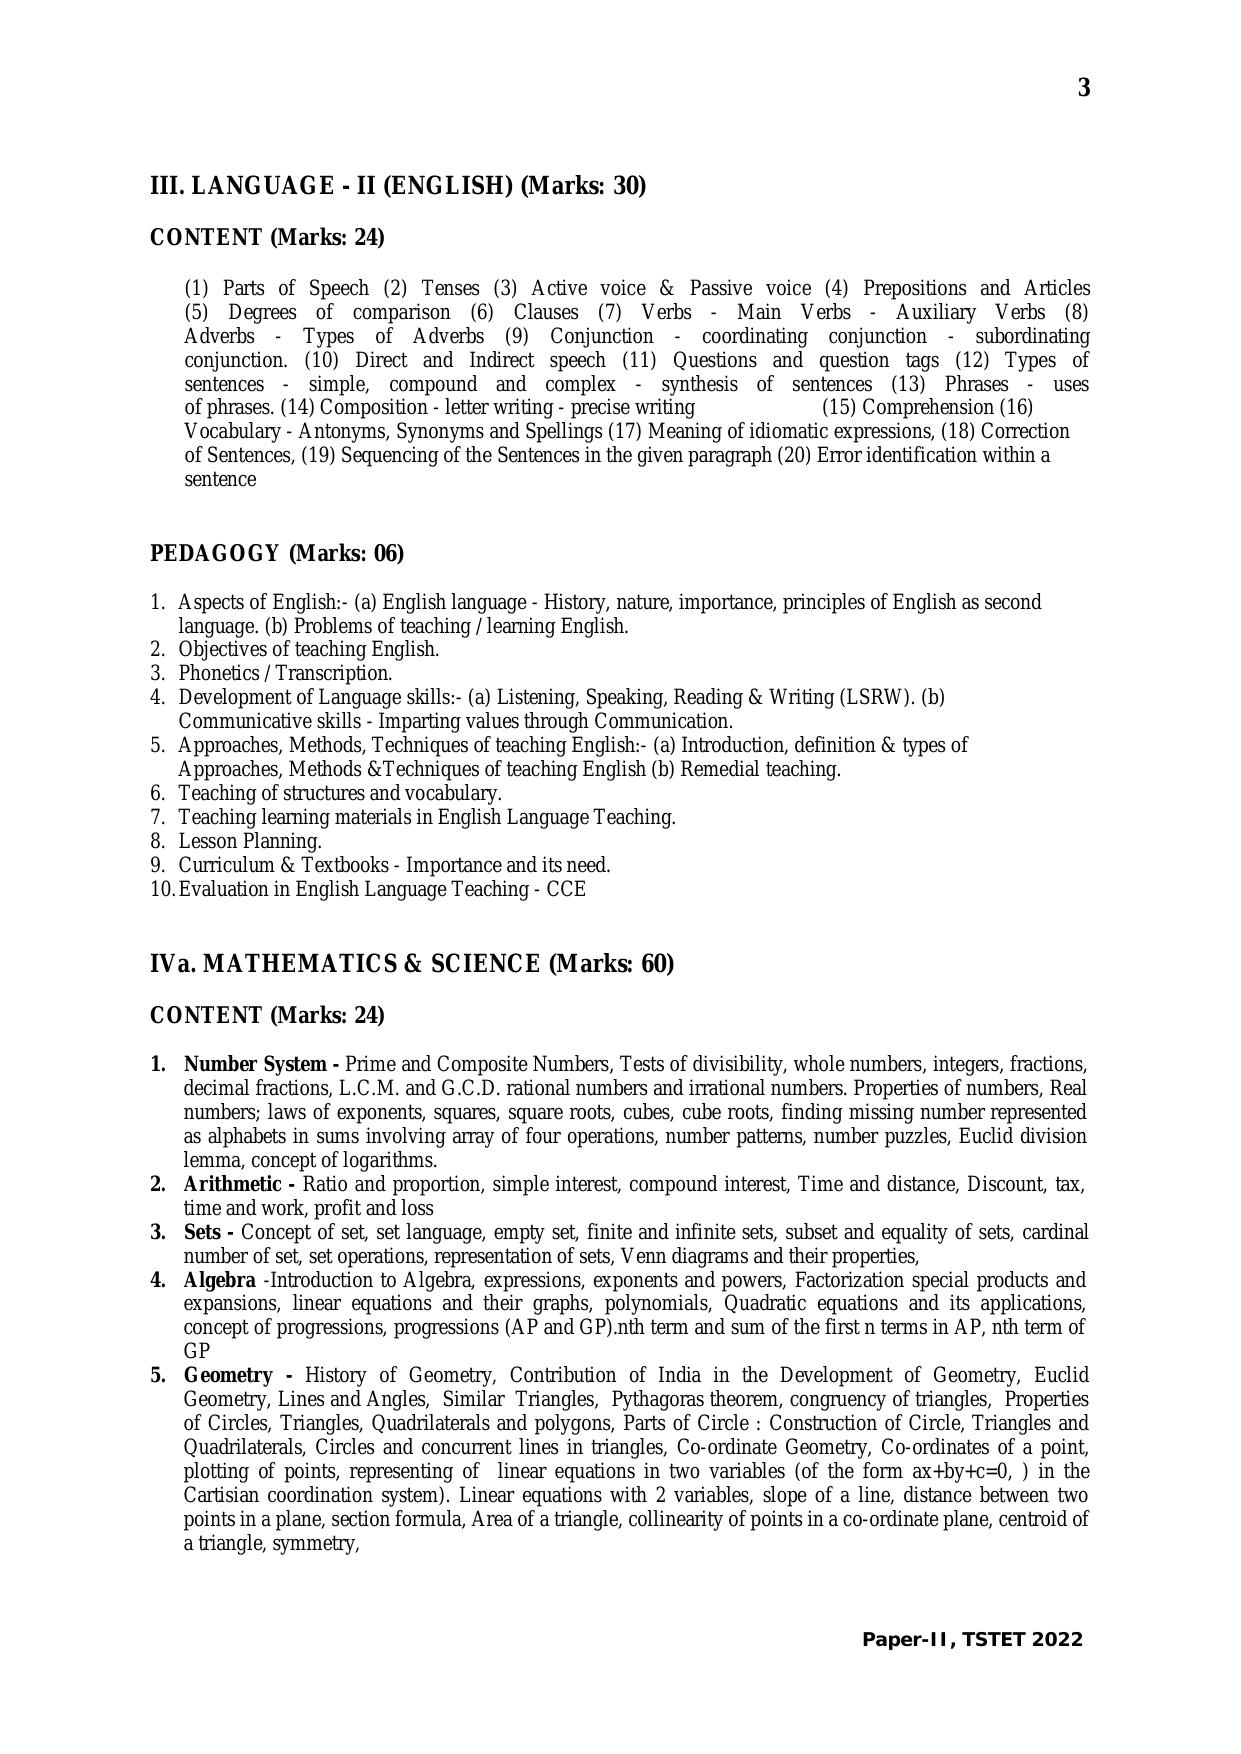 TS TET Syllabus for Paper 2 (Marathi) - Page 3